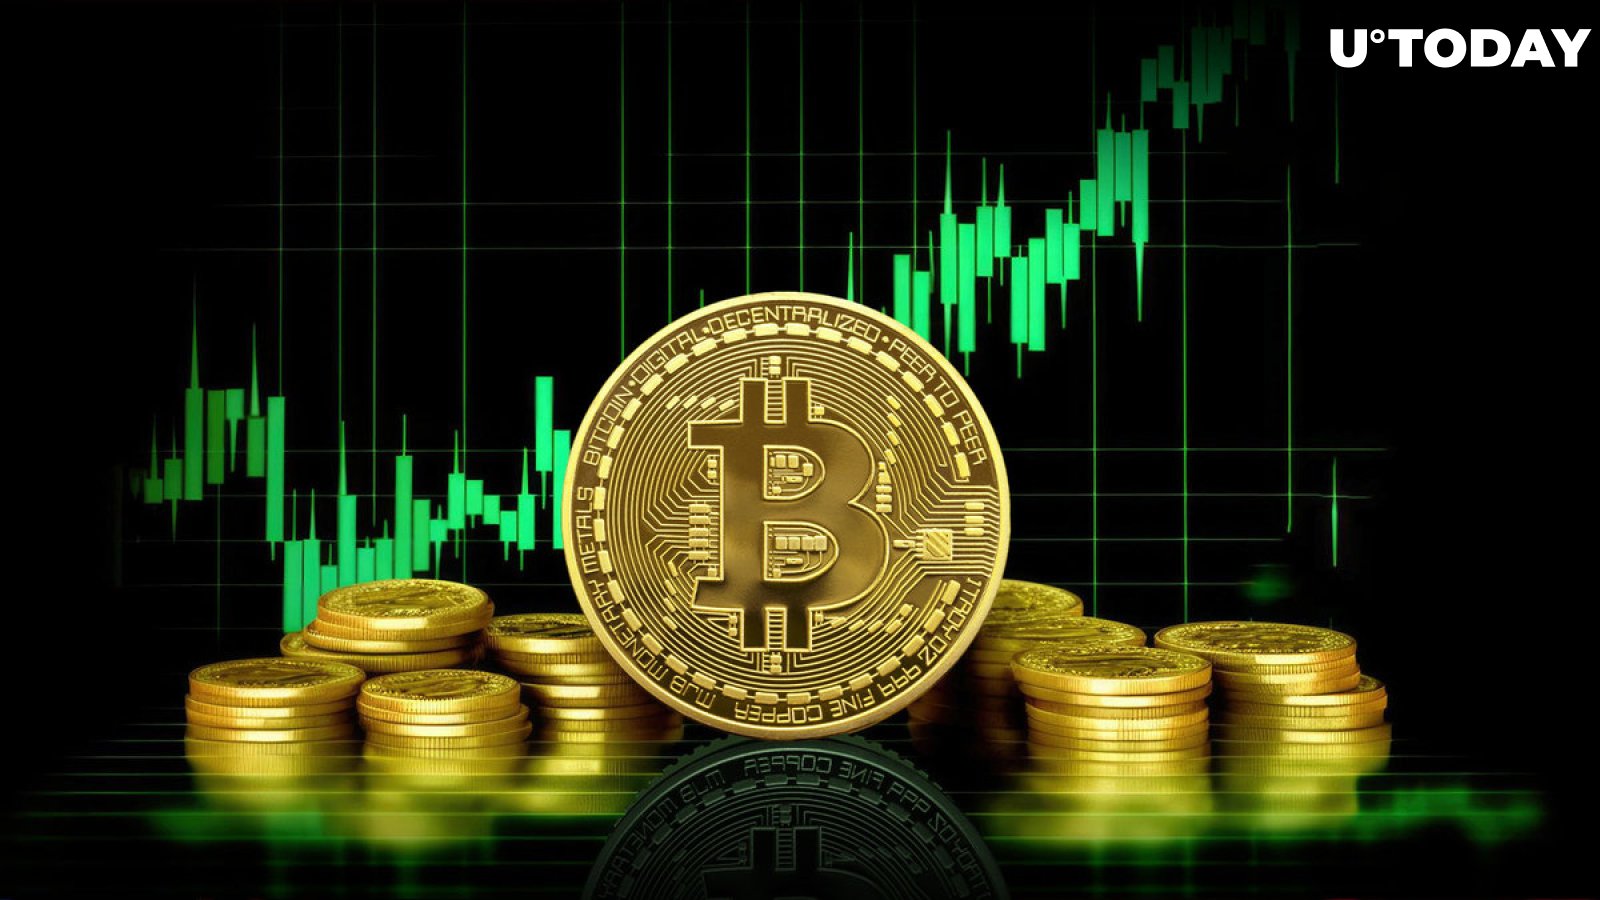 Bitcoin-prisen stiger til $74,000 XNUMX spådd av trader Bob Lukas, ifølge denne beregningen